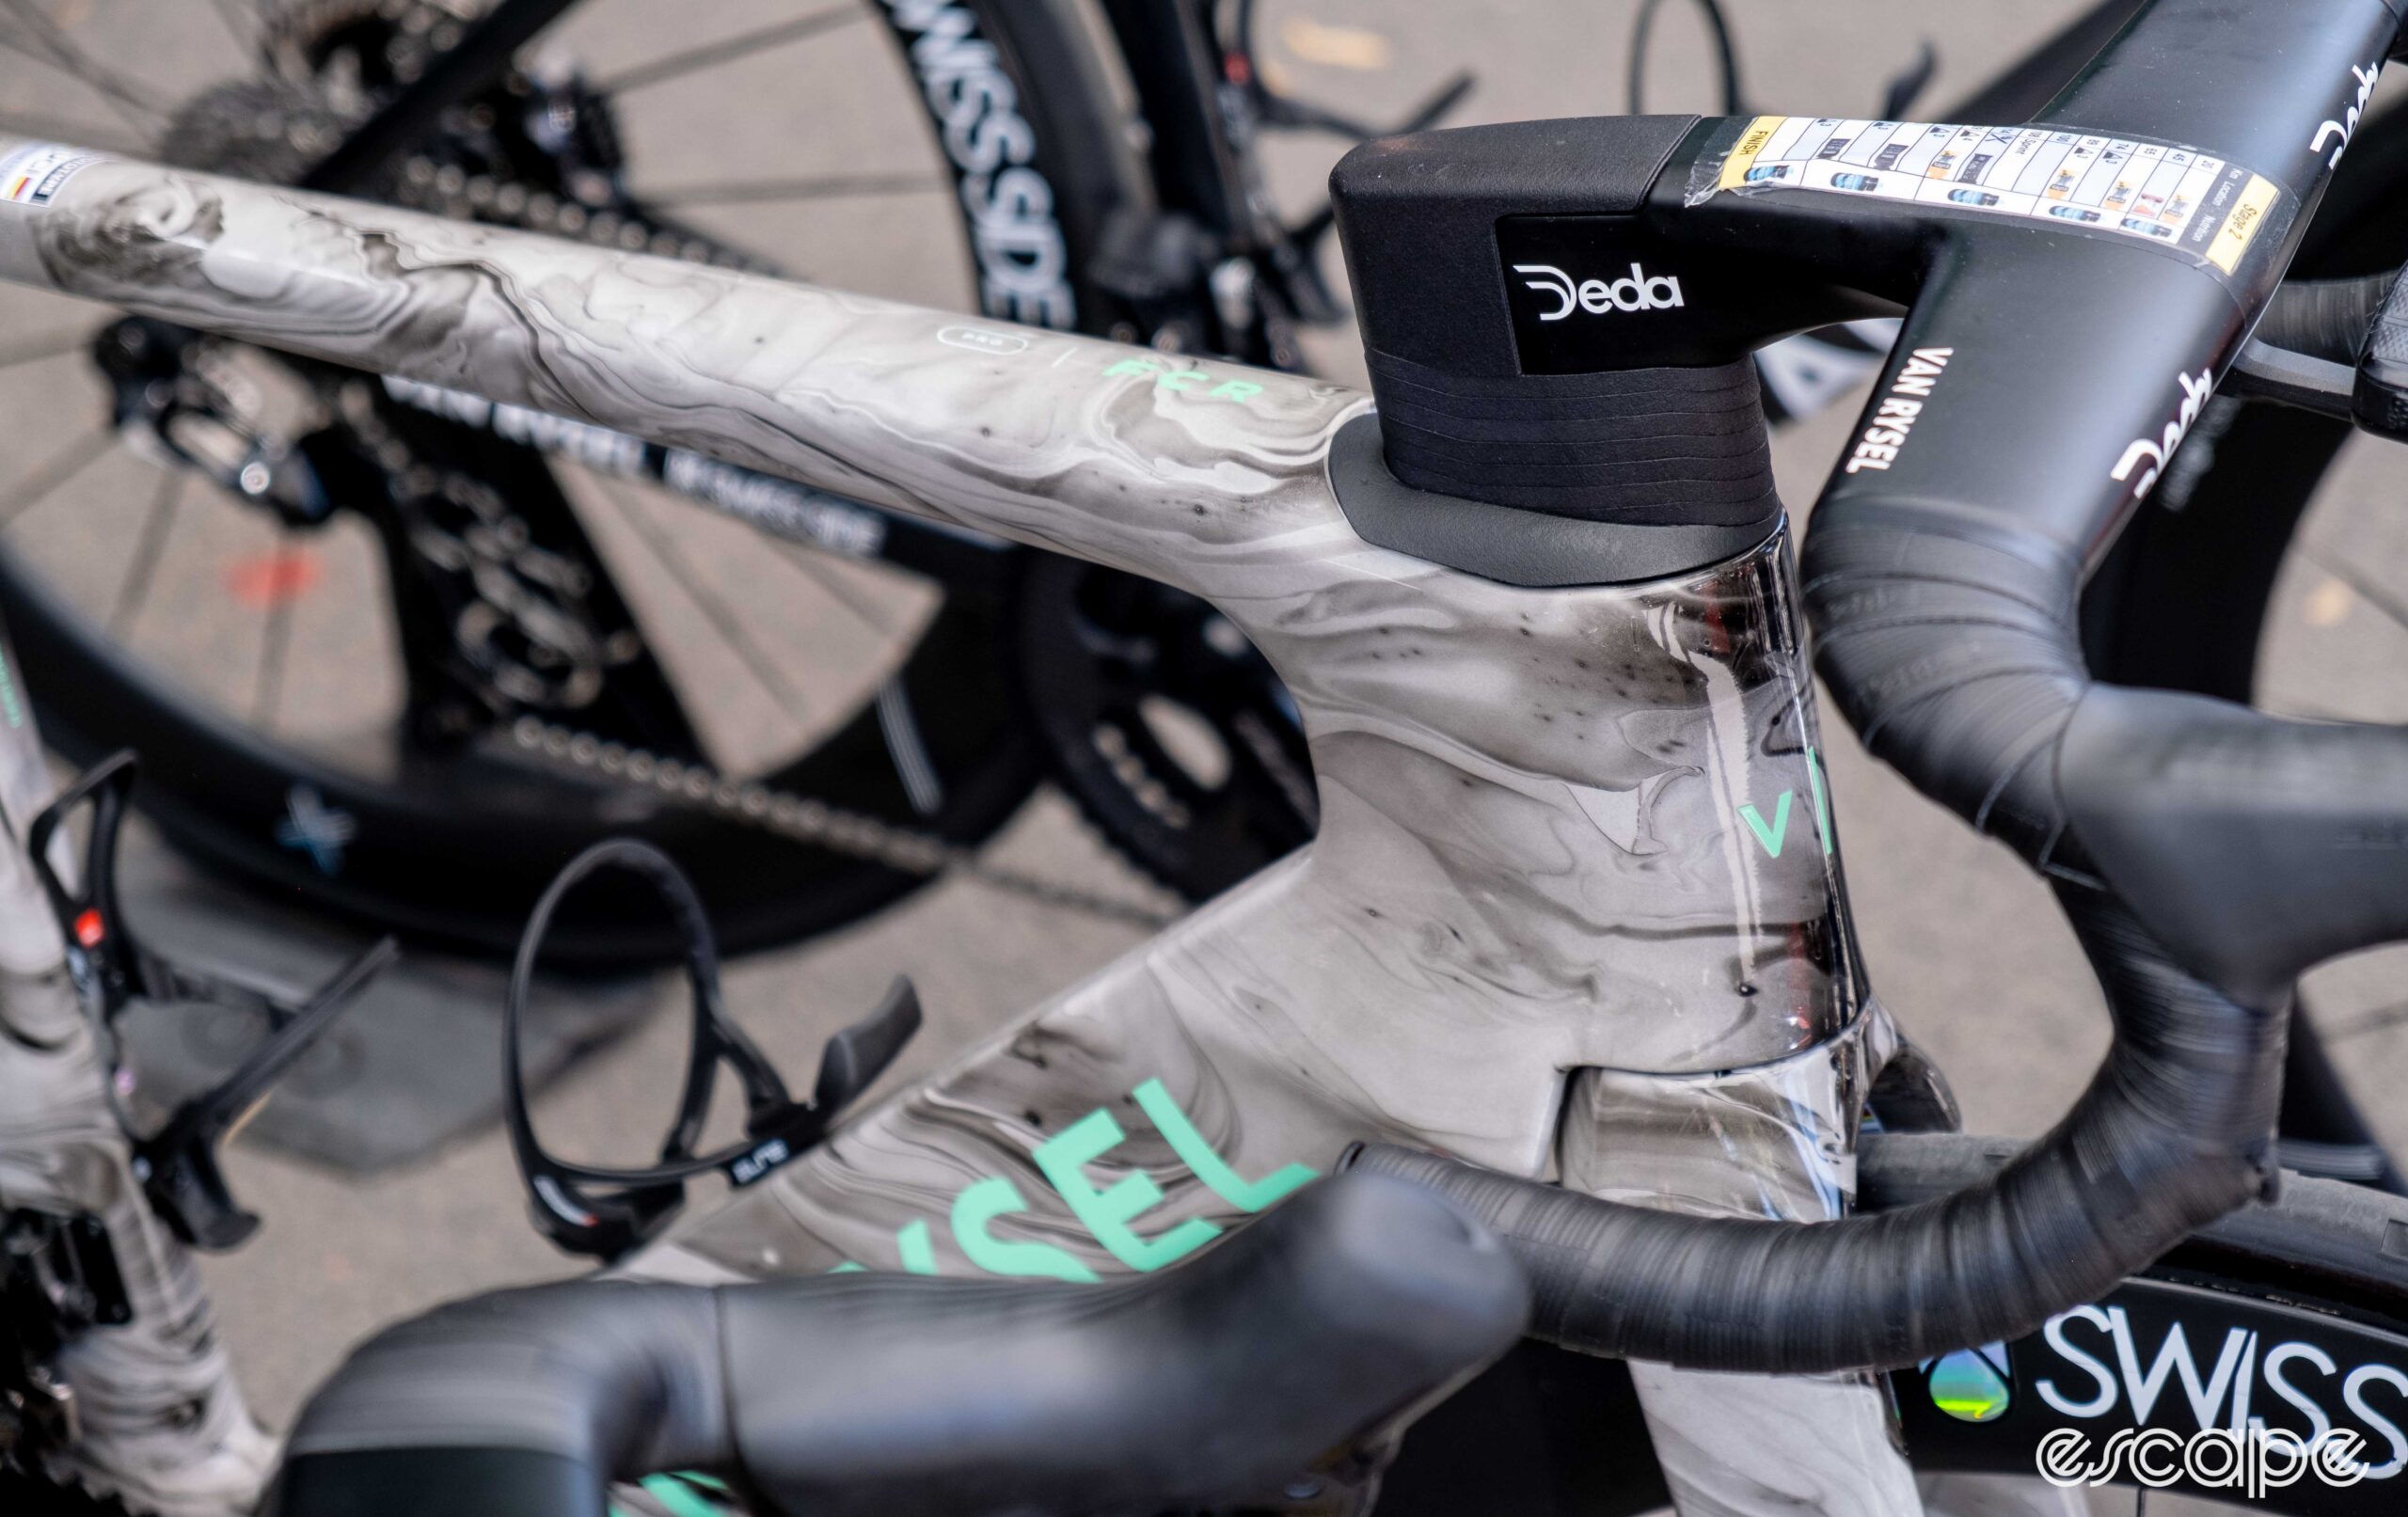 The photo shows Van Rysel's new FCR Pro aero bike handlebars